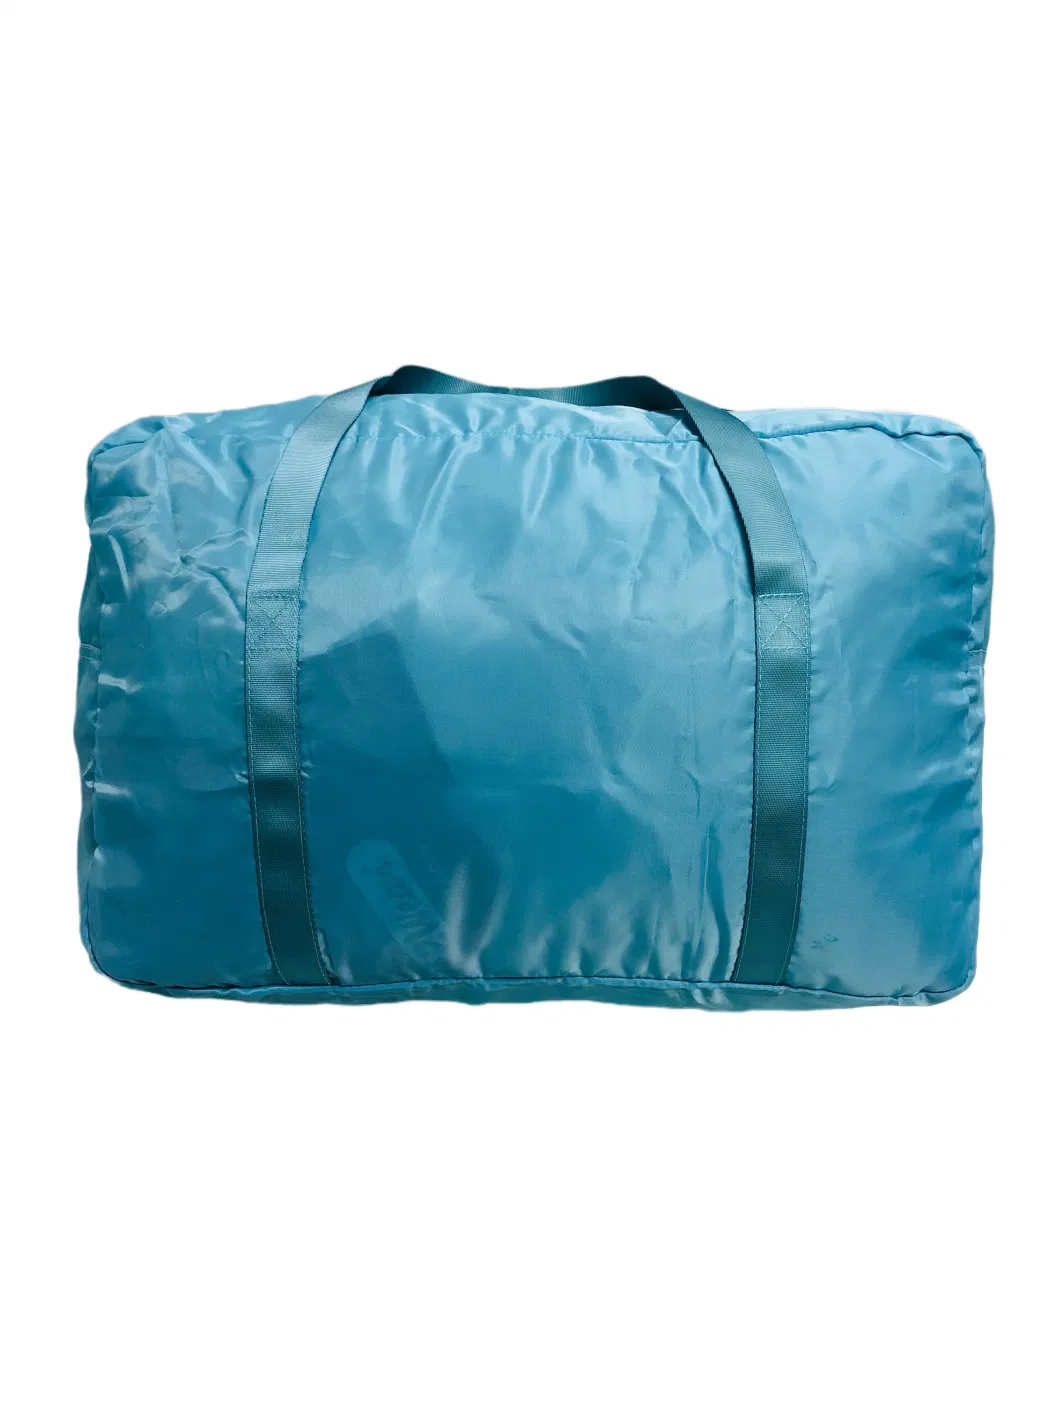 Custom Convenient Large Capacity Waterproof Duffel Bag for Travelling